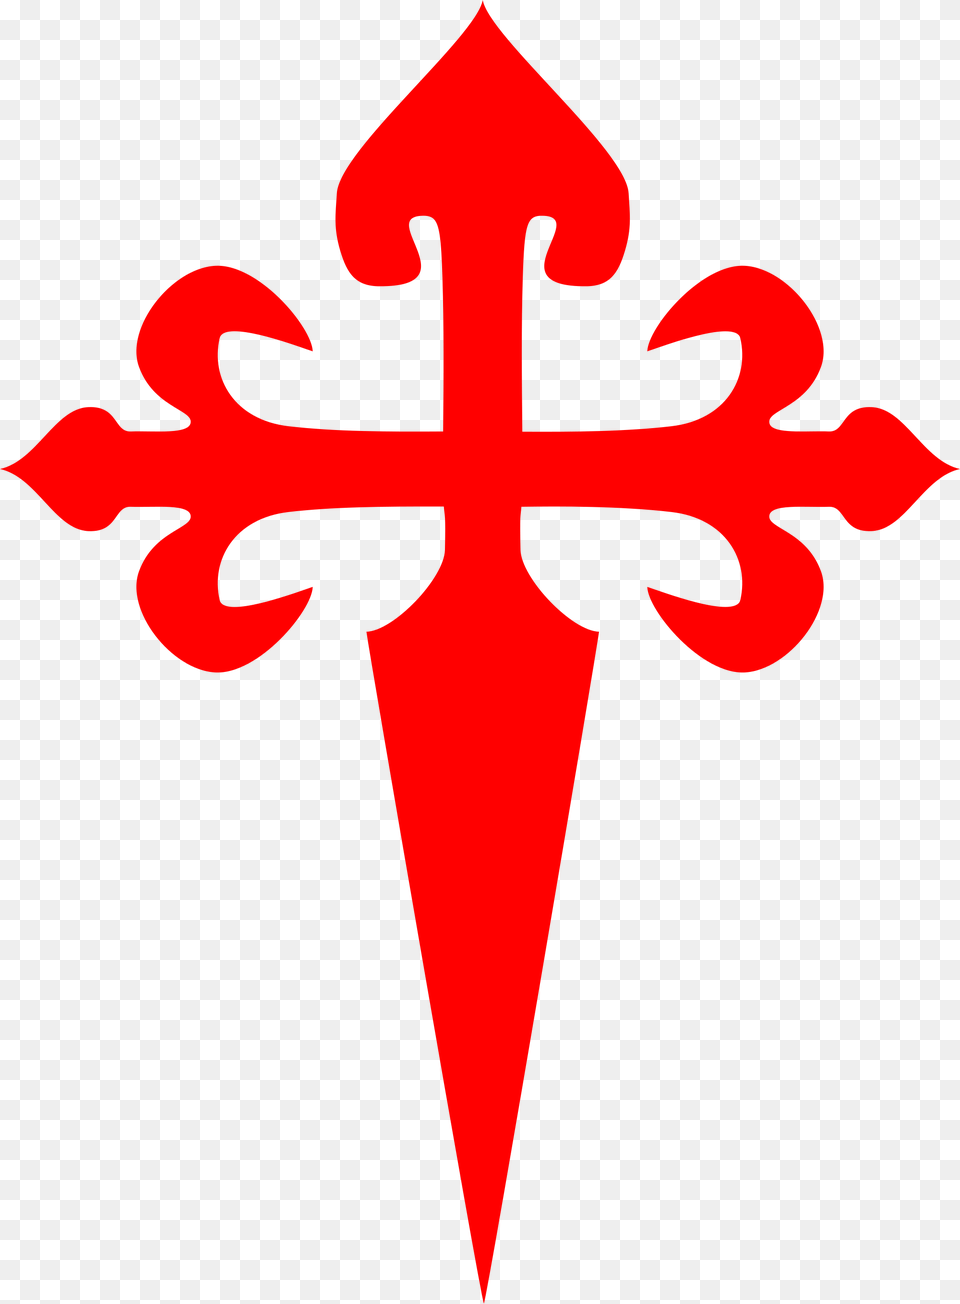 Alonso De C Cross Of Santiago, Symbol, Weapon Free Png Download